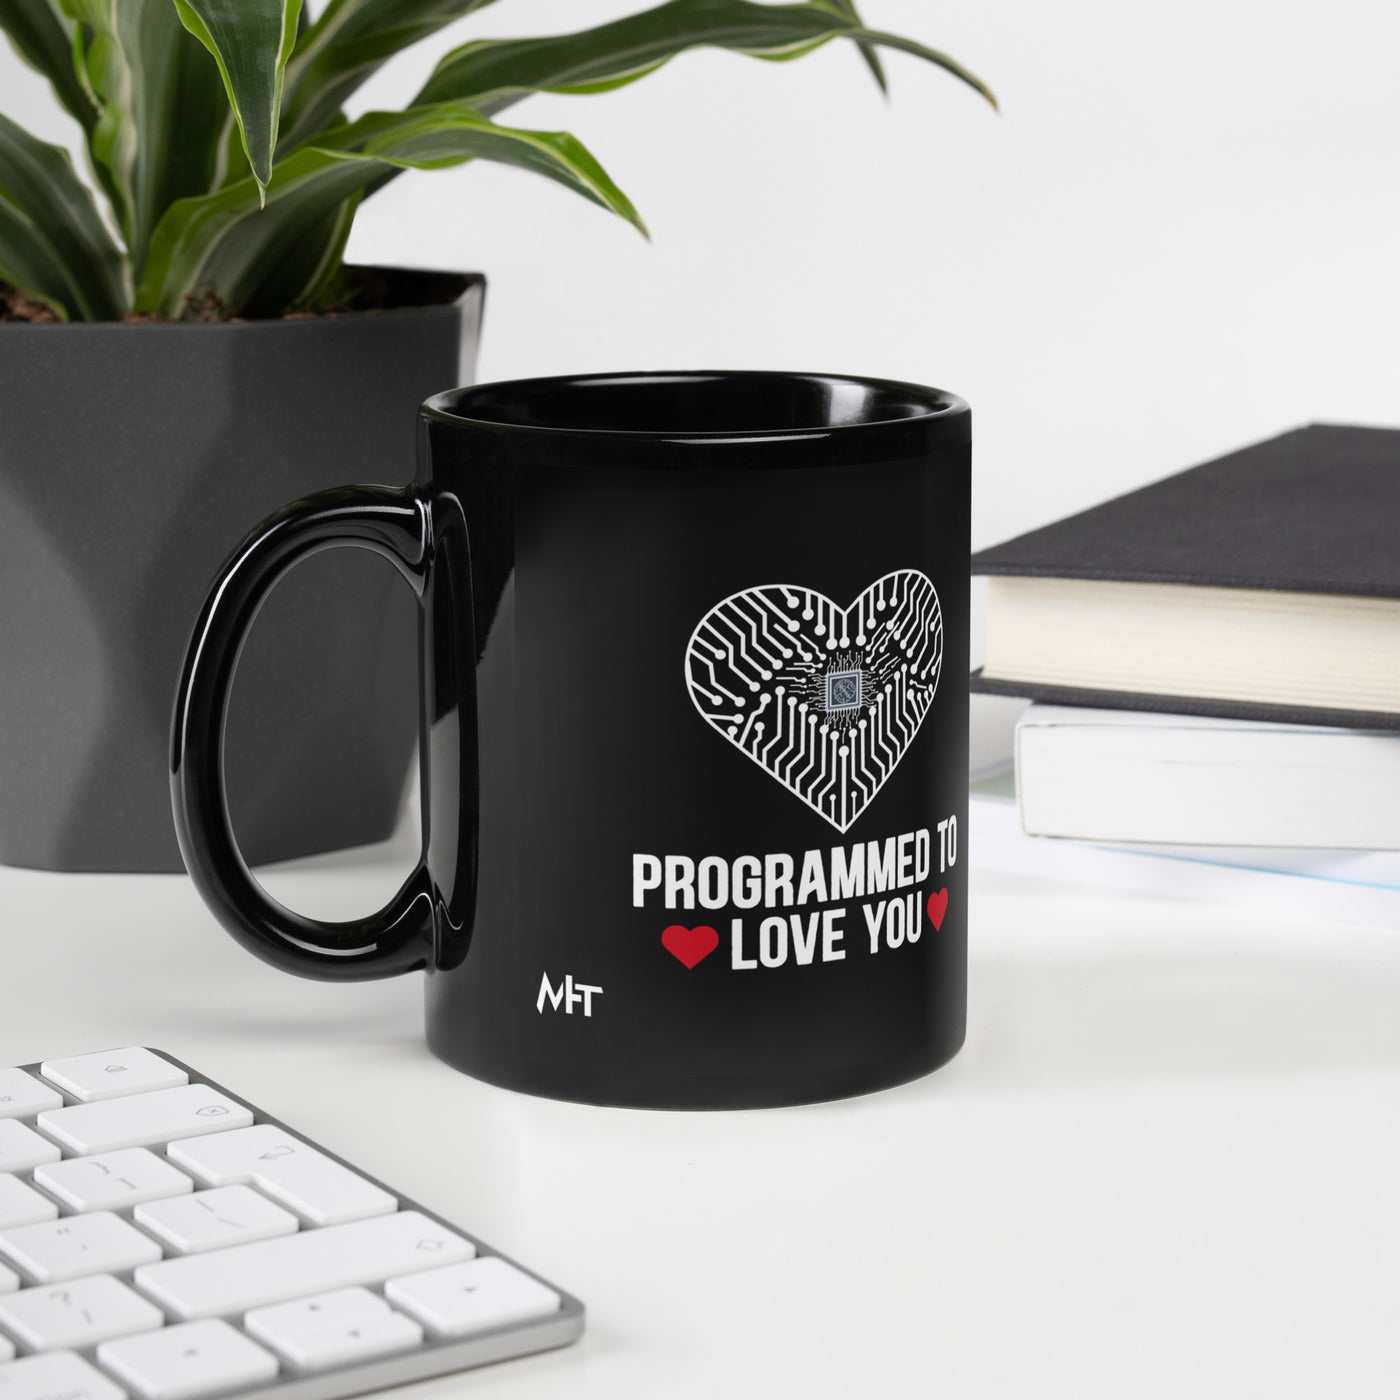 Programmed to Love you - Black Glossy Mug